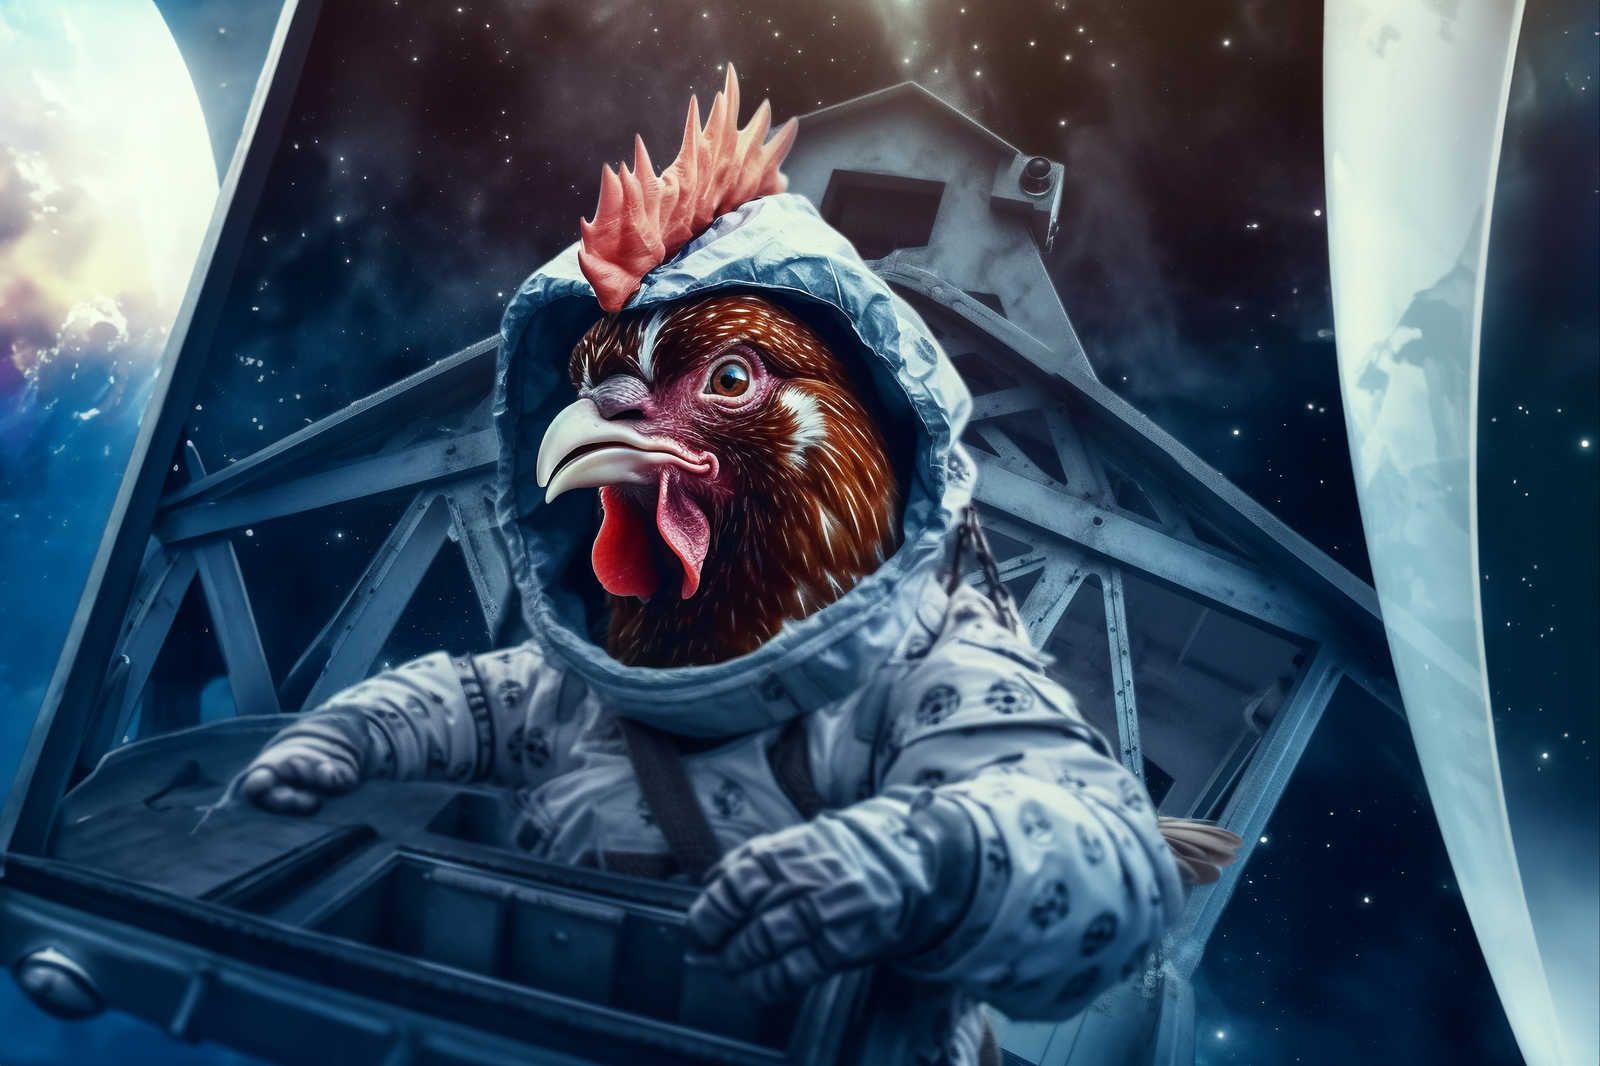             Toile KI »Space Chicken« - 90 cm x 60 cm
        